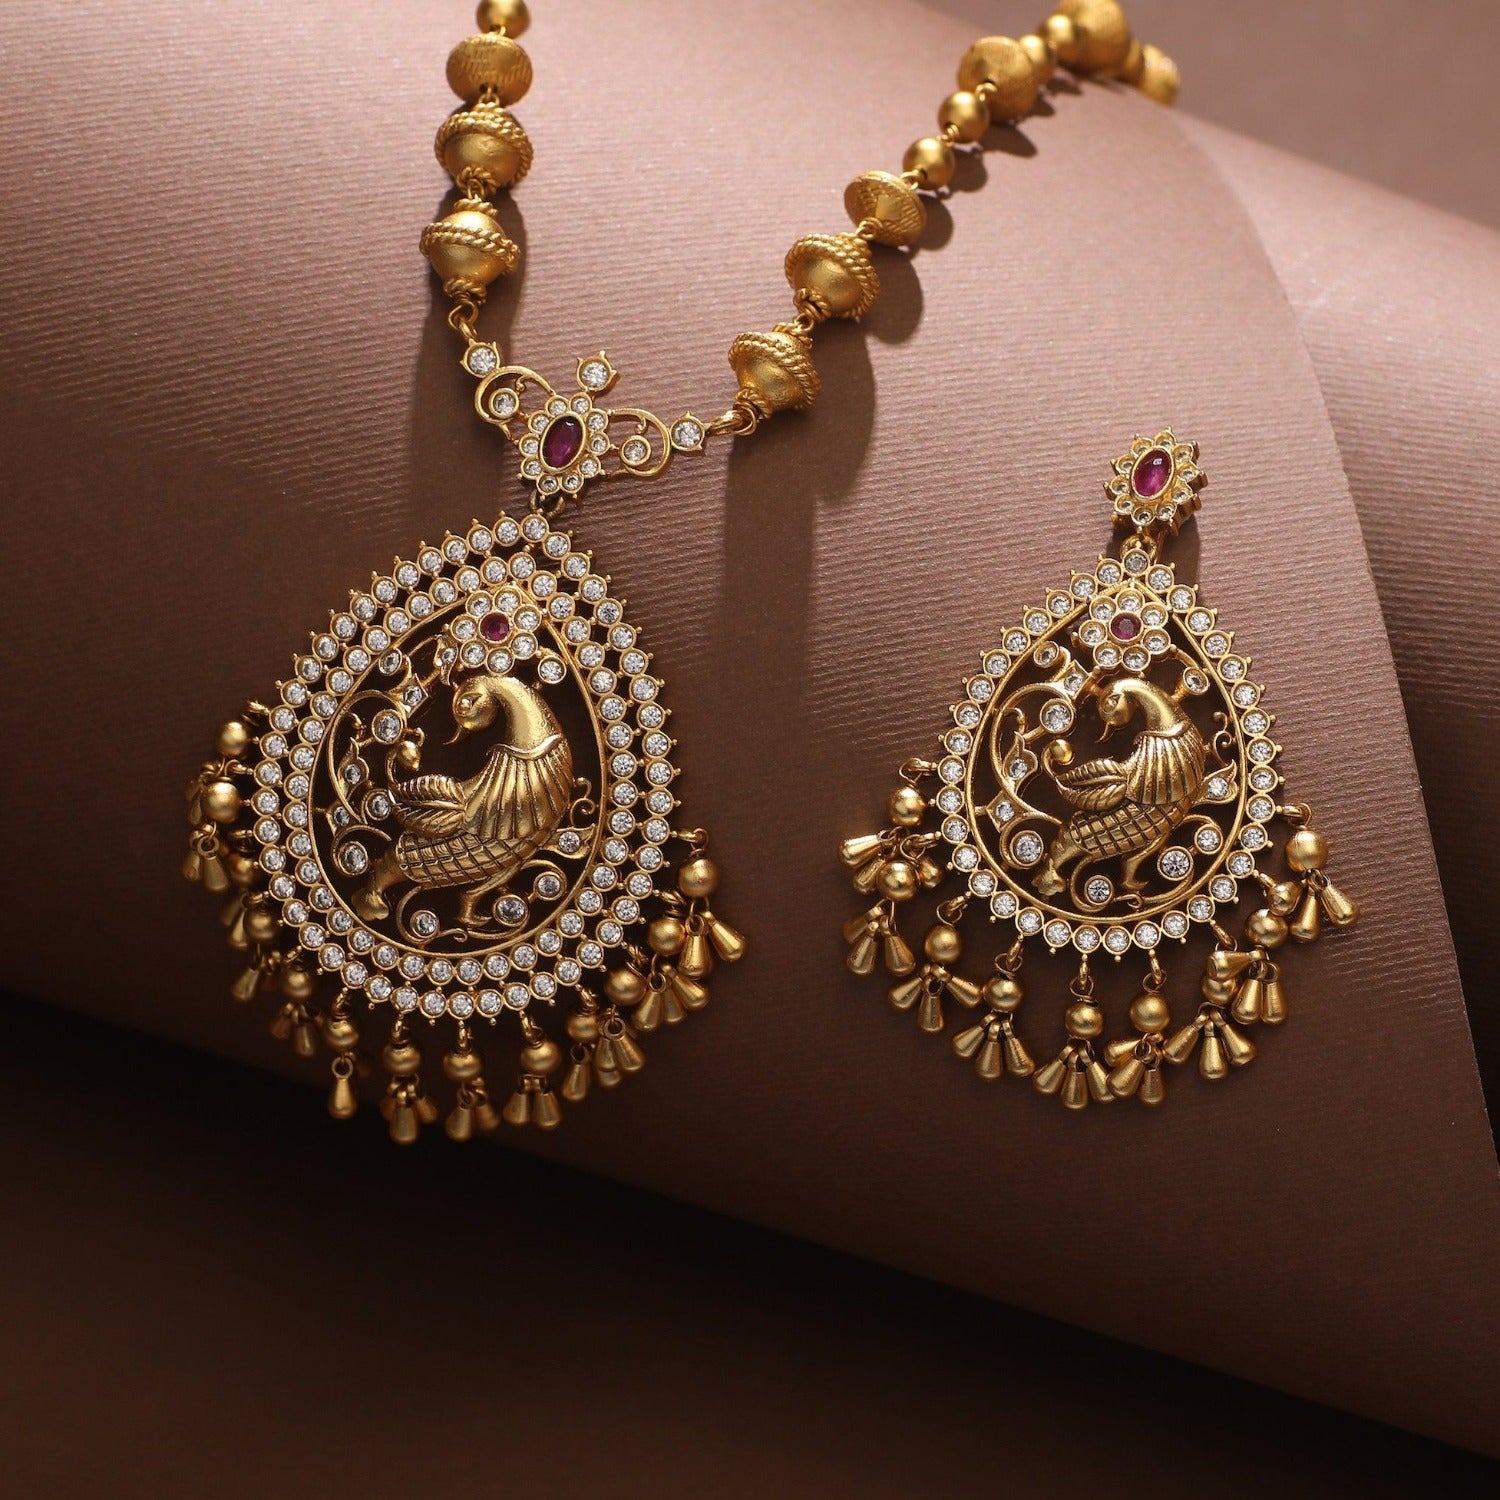 Scrolling Design Pearl Earrings & Pendant Set 14K White Gold